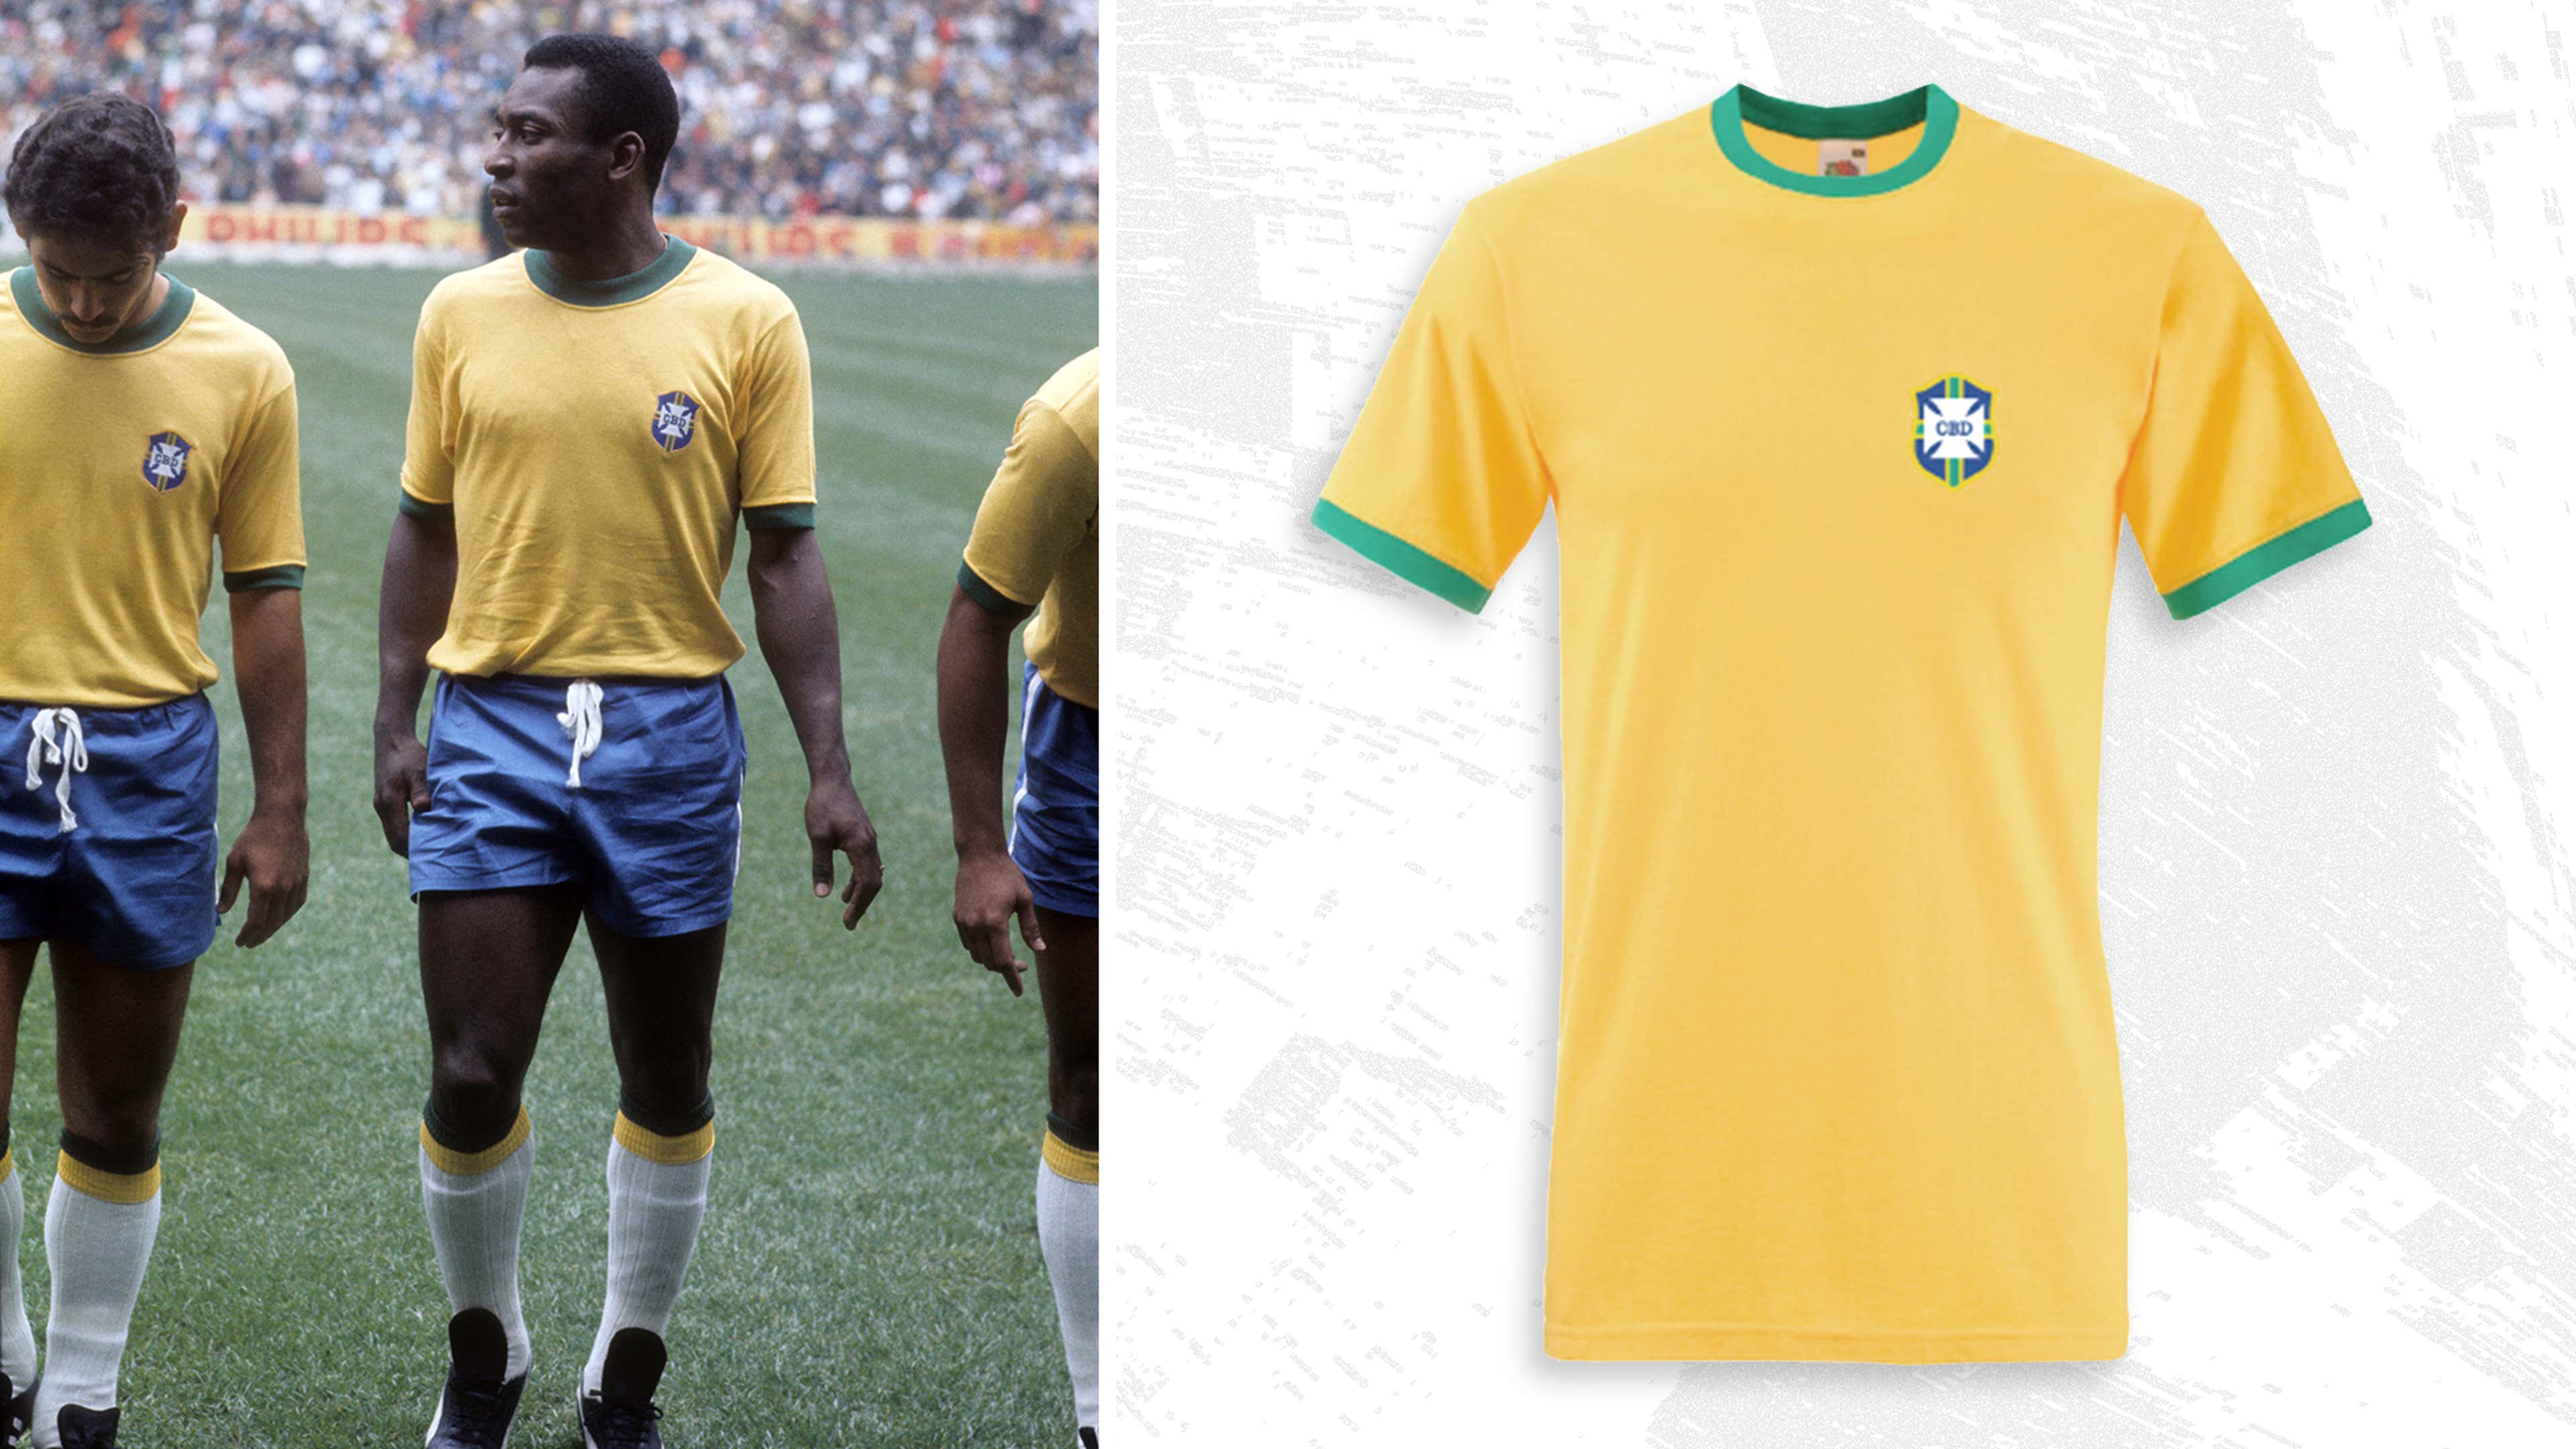 Brazil 1970 Away Kit